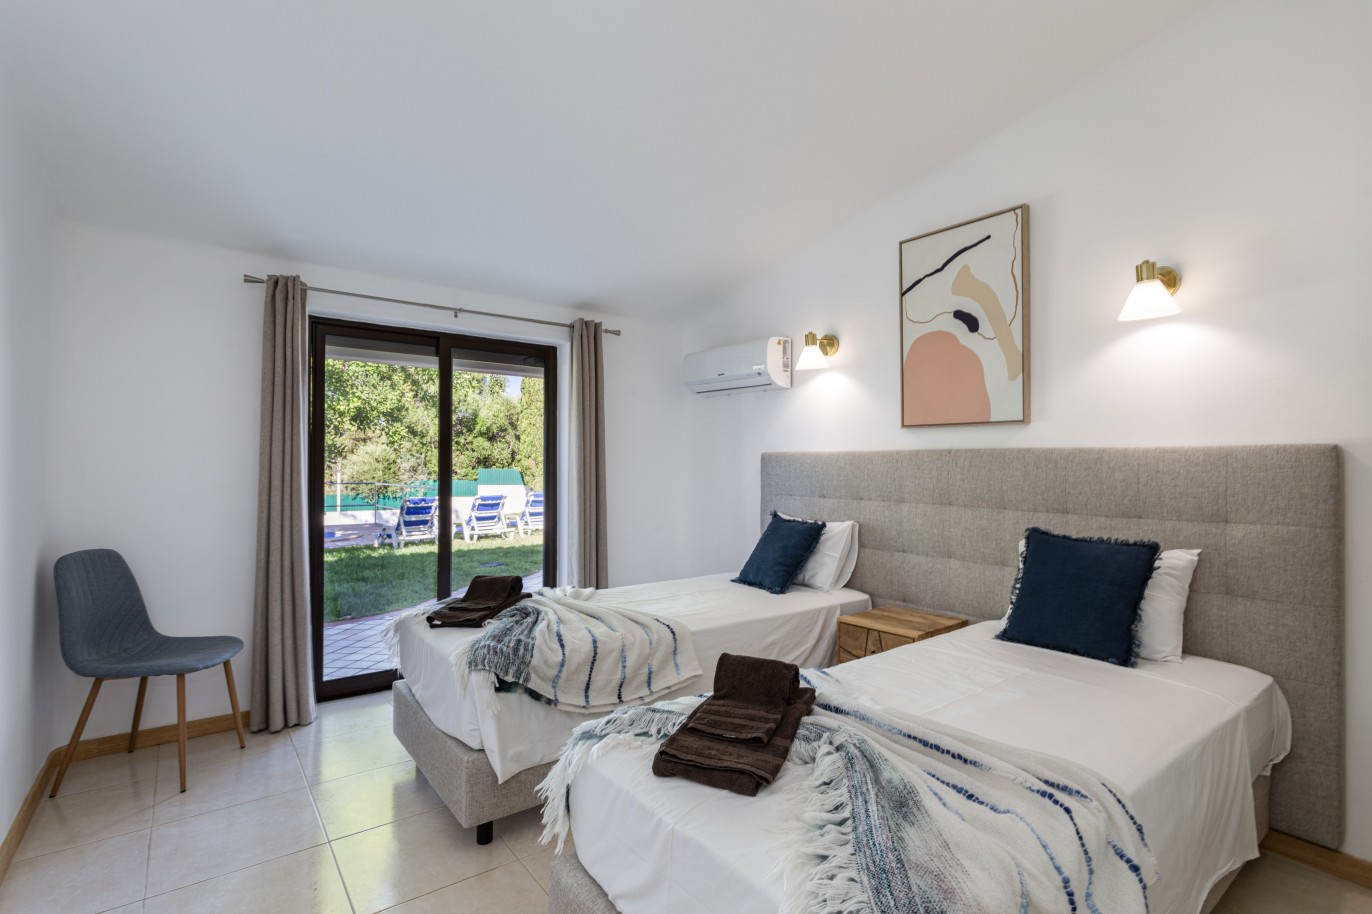 4 bedroom villa with pool, for sale in Albufeira, Algarve_233600